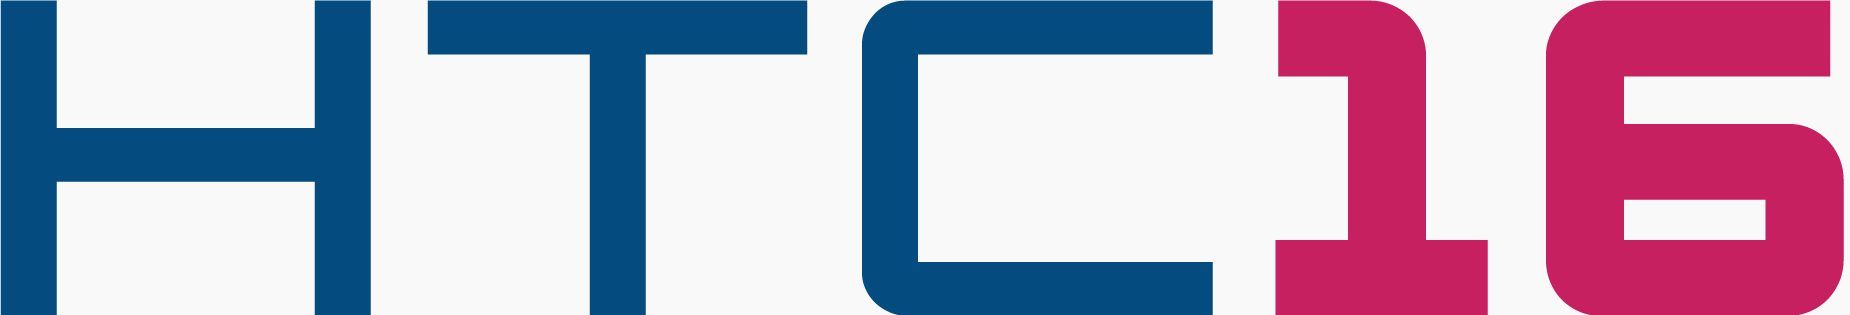 HTC16_logo